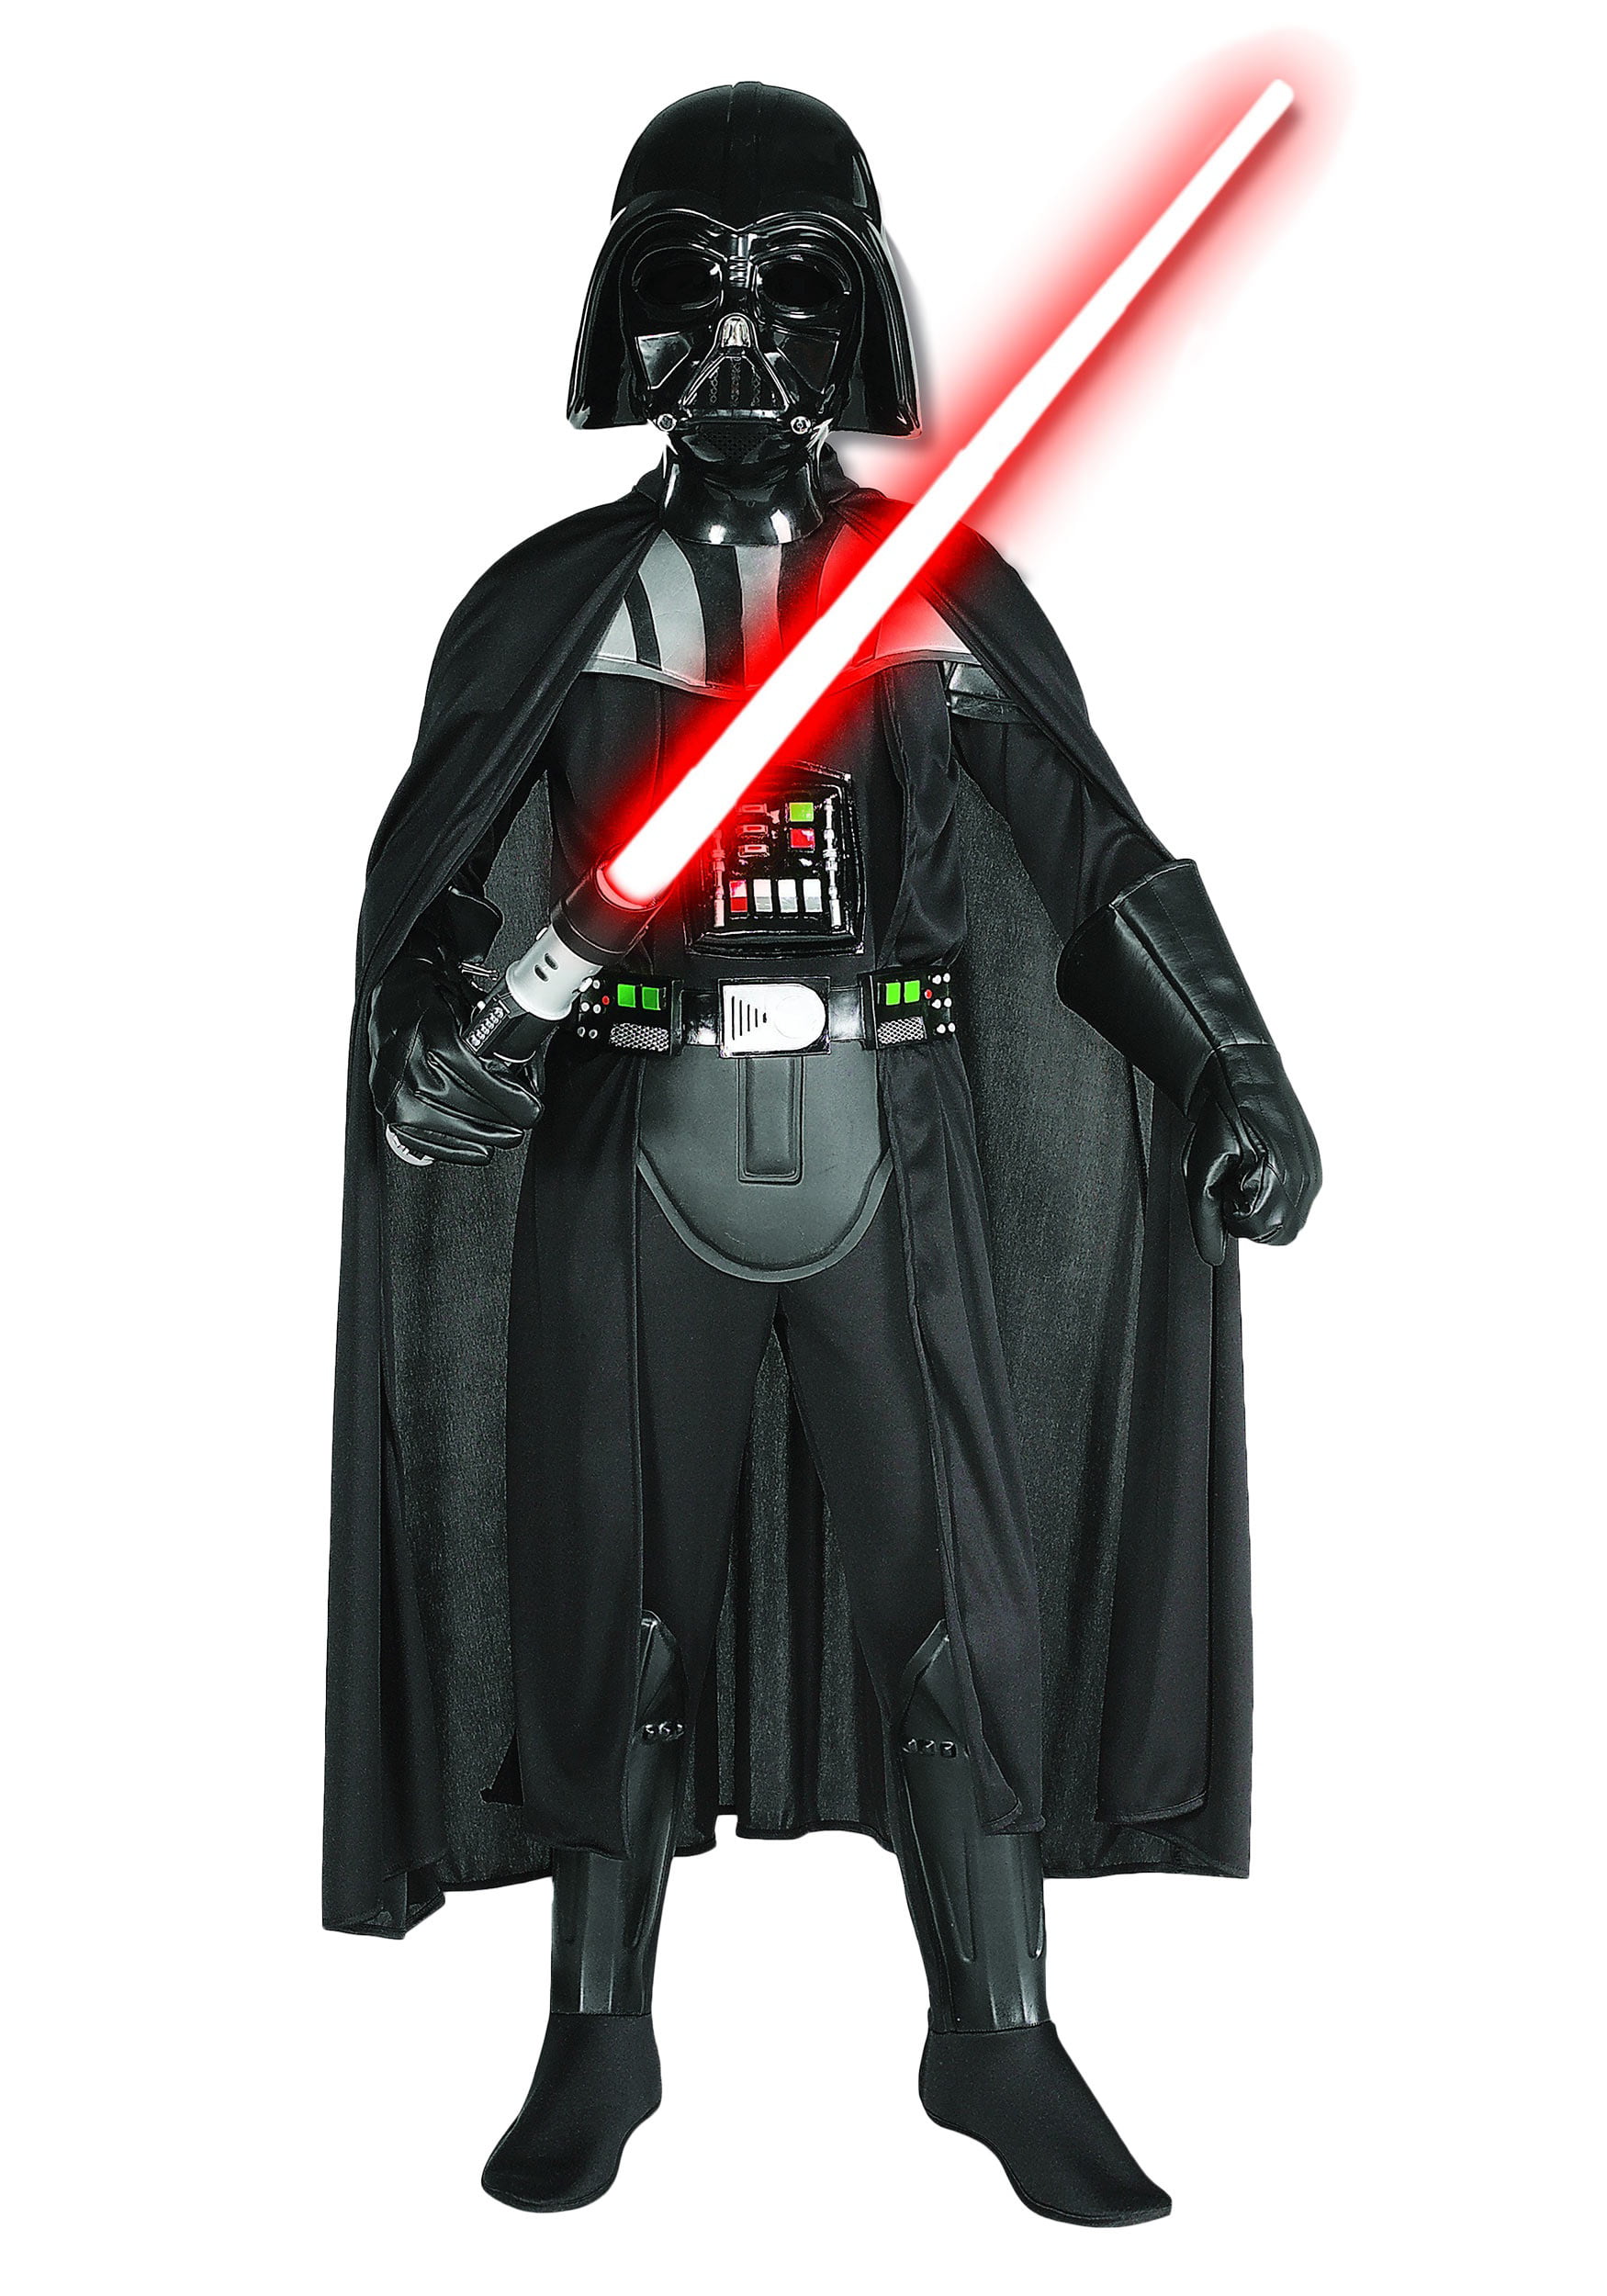 Star Wars Darth Vader "Now I Am The Master!" VINYL DECAL STICKER 